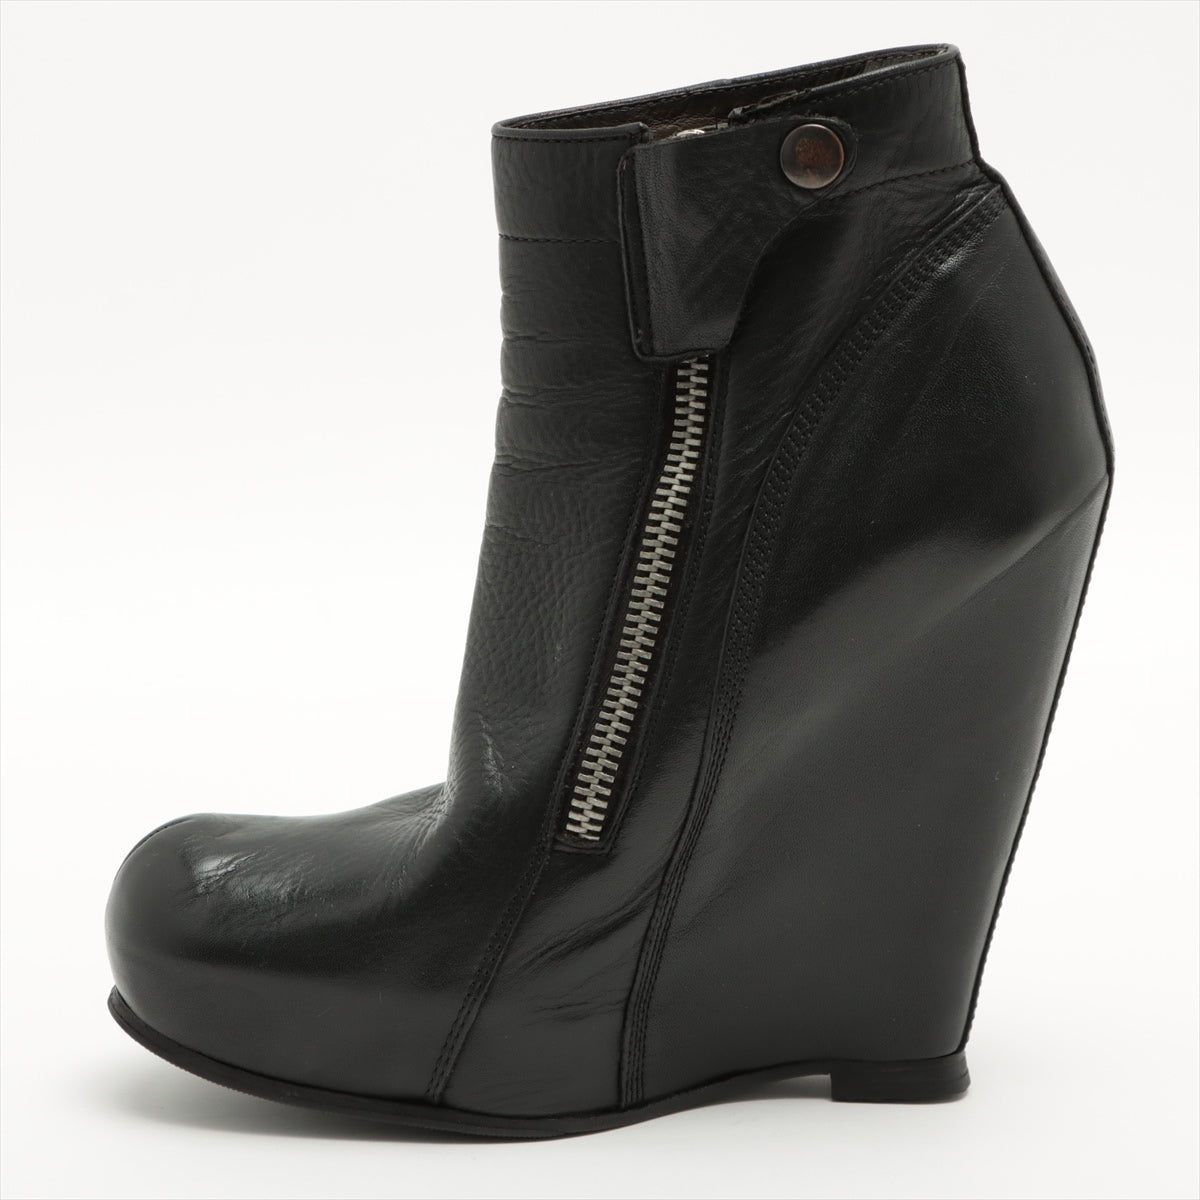 Rick Owens Leather Short Boots Unknown size Ladies' Black Inheel